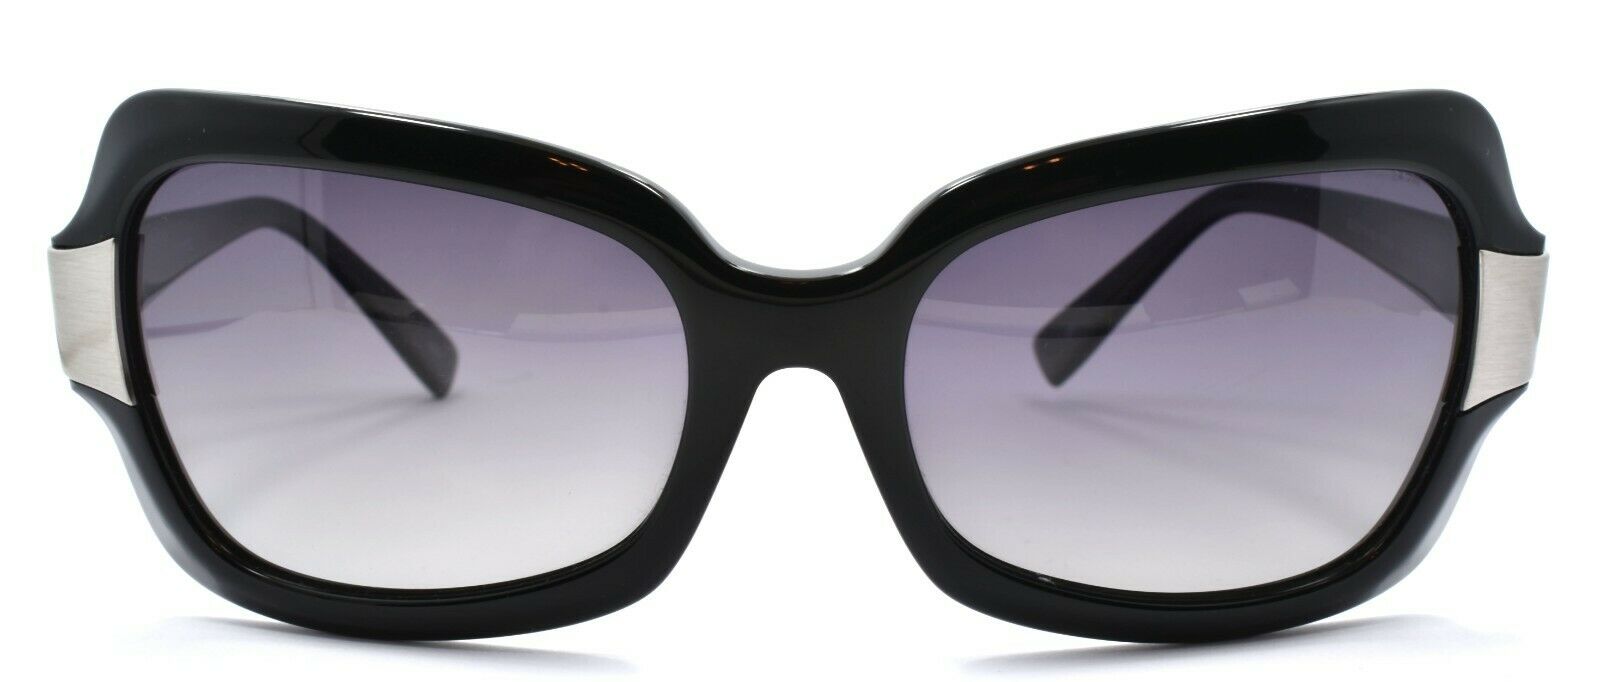 2-Oliver Peoples Vilette BK/S Women's Sunglasses Black / Violet Polarized JAPAN-Does not apply-IKSpecs